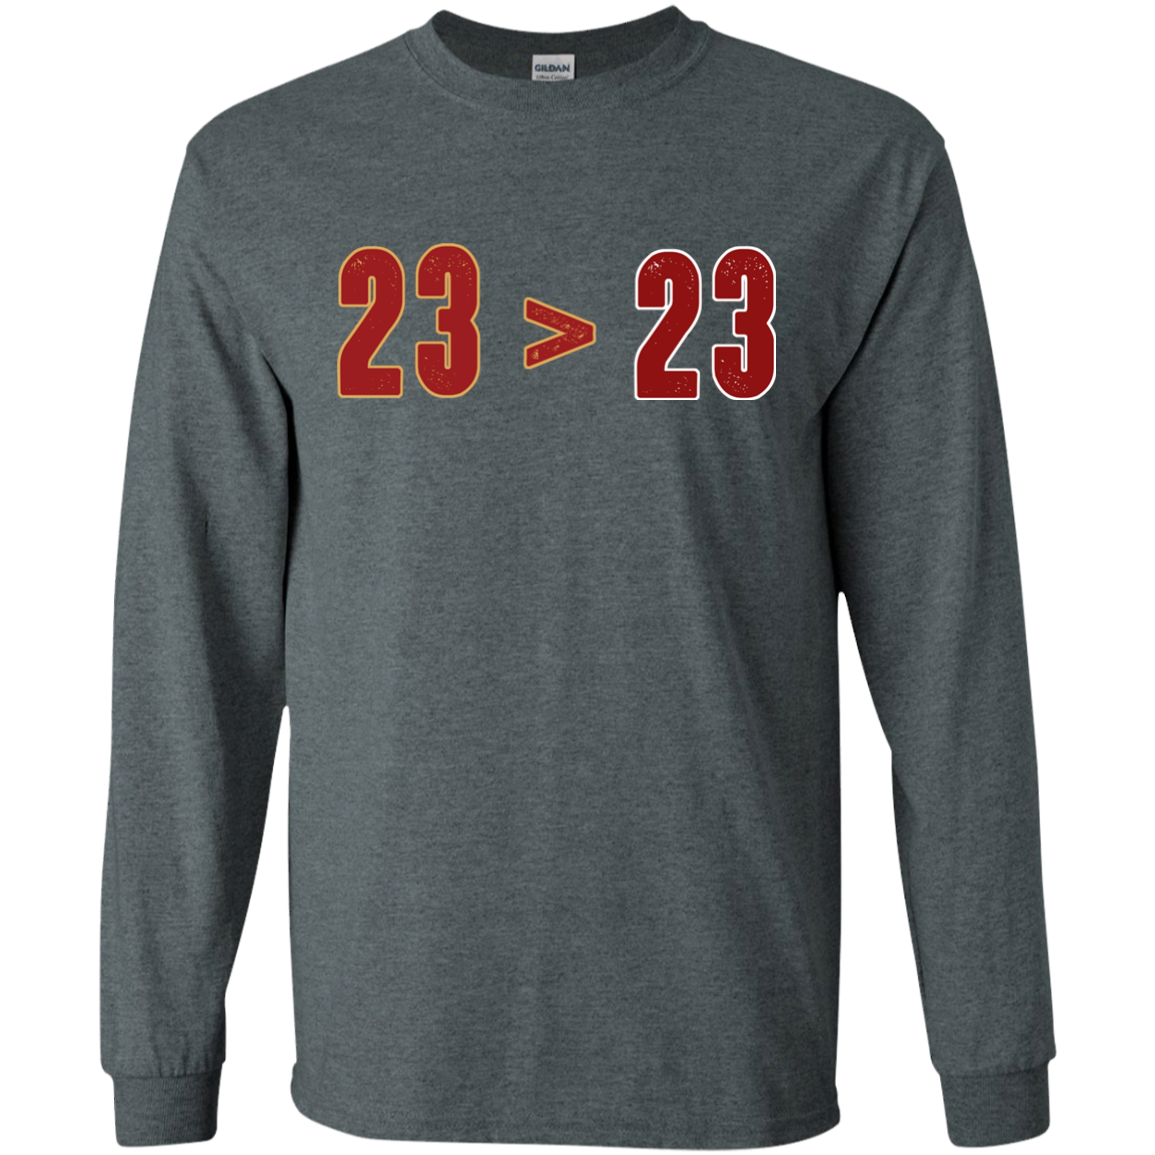 23 Greater than 23 T-shirt, LeBron Greater Than Jordan T-shirt,Tank ...